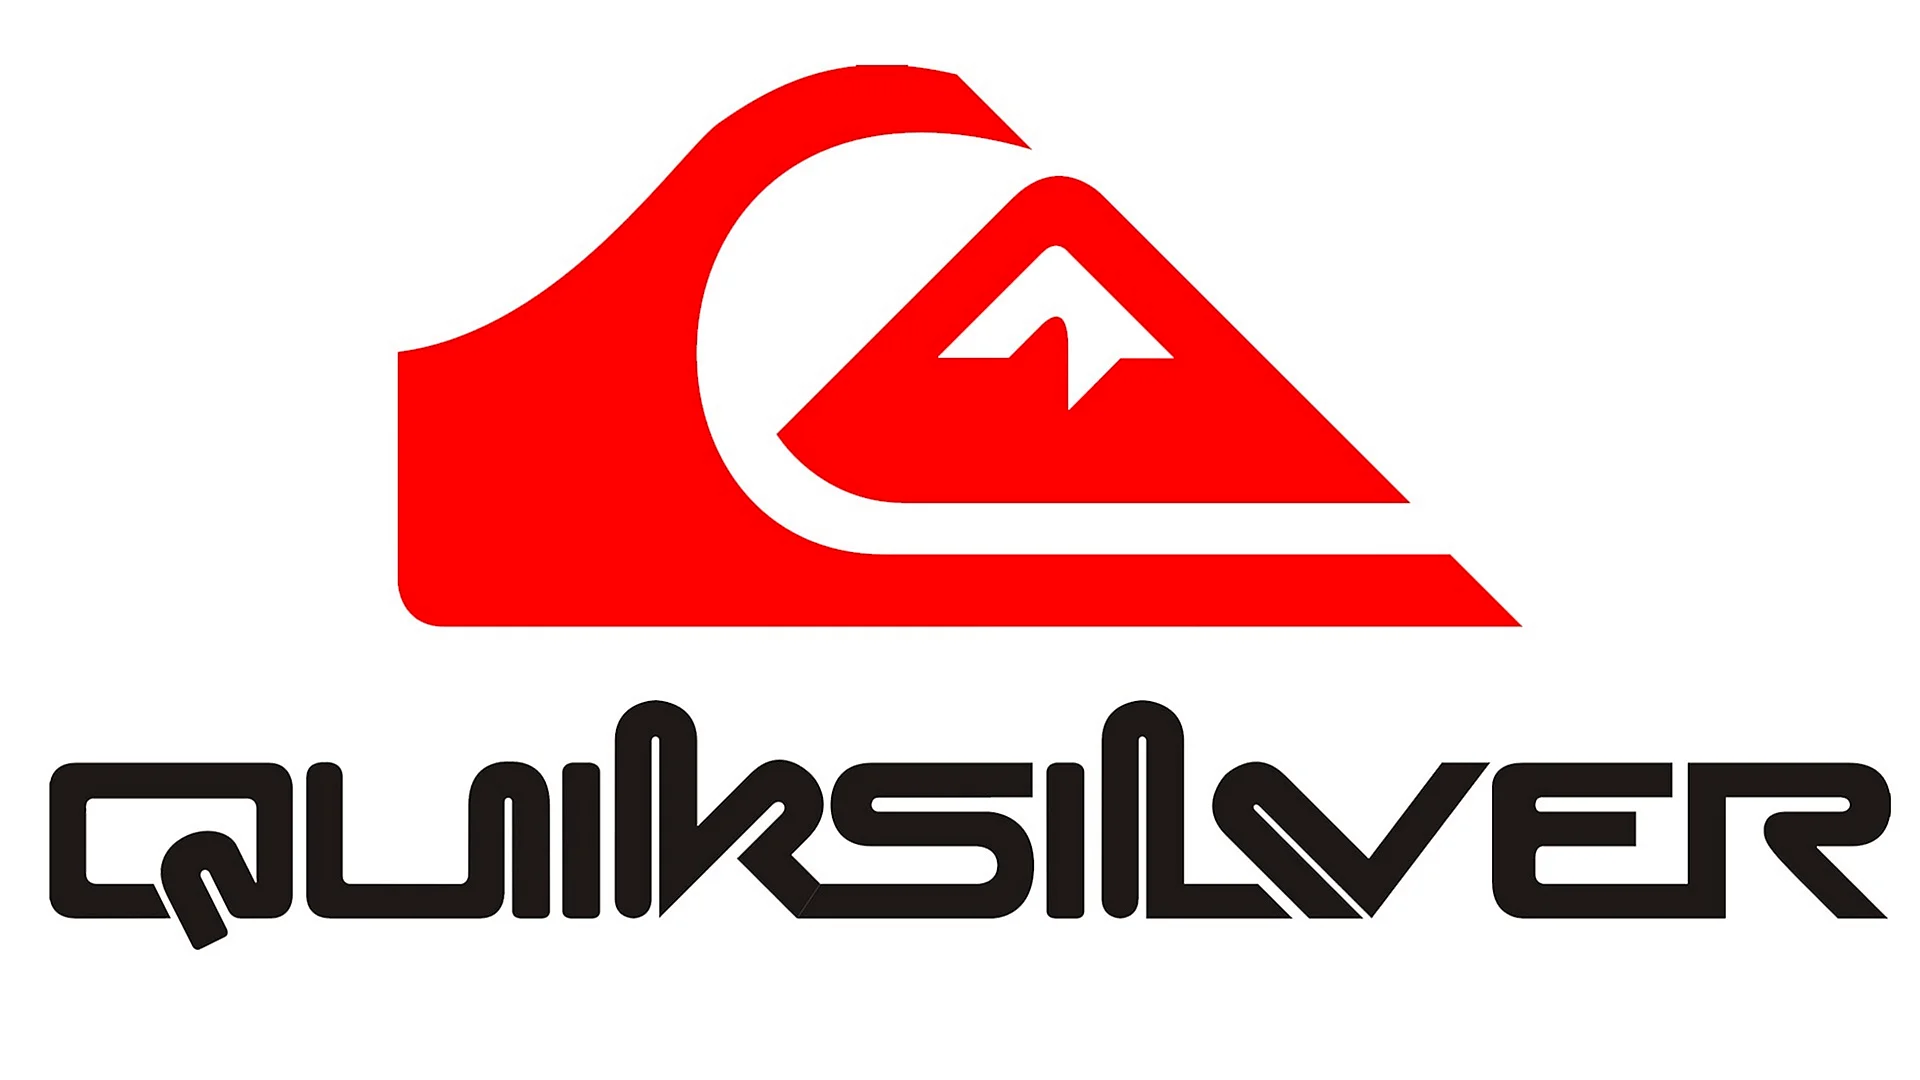 Quiksilver Logo Wallpaper